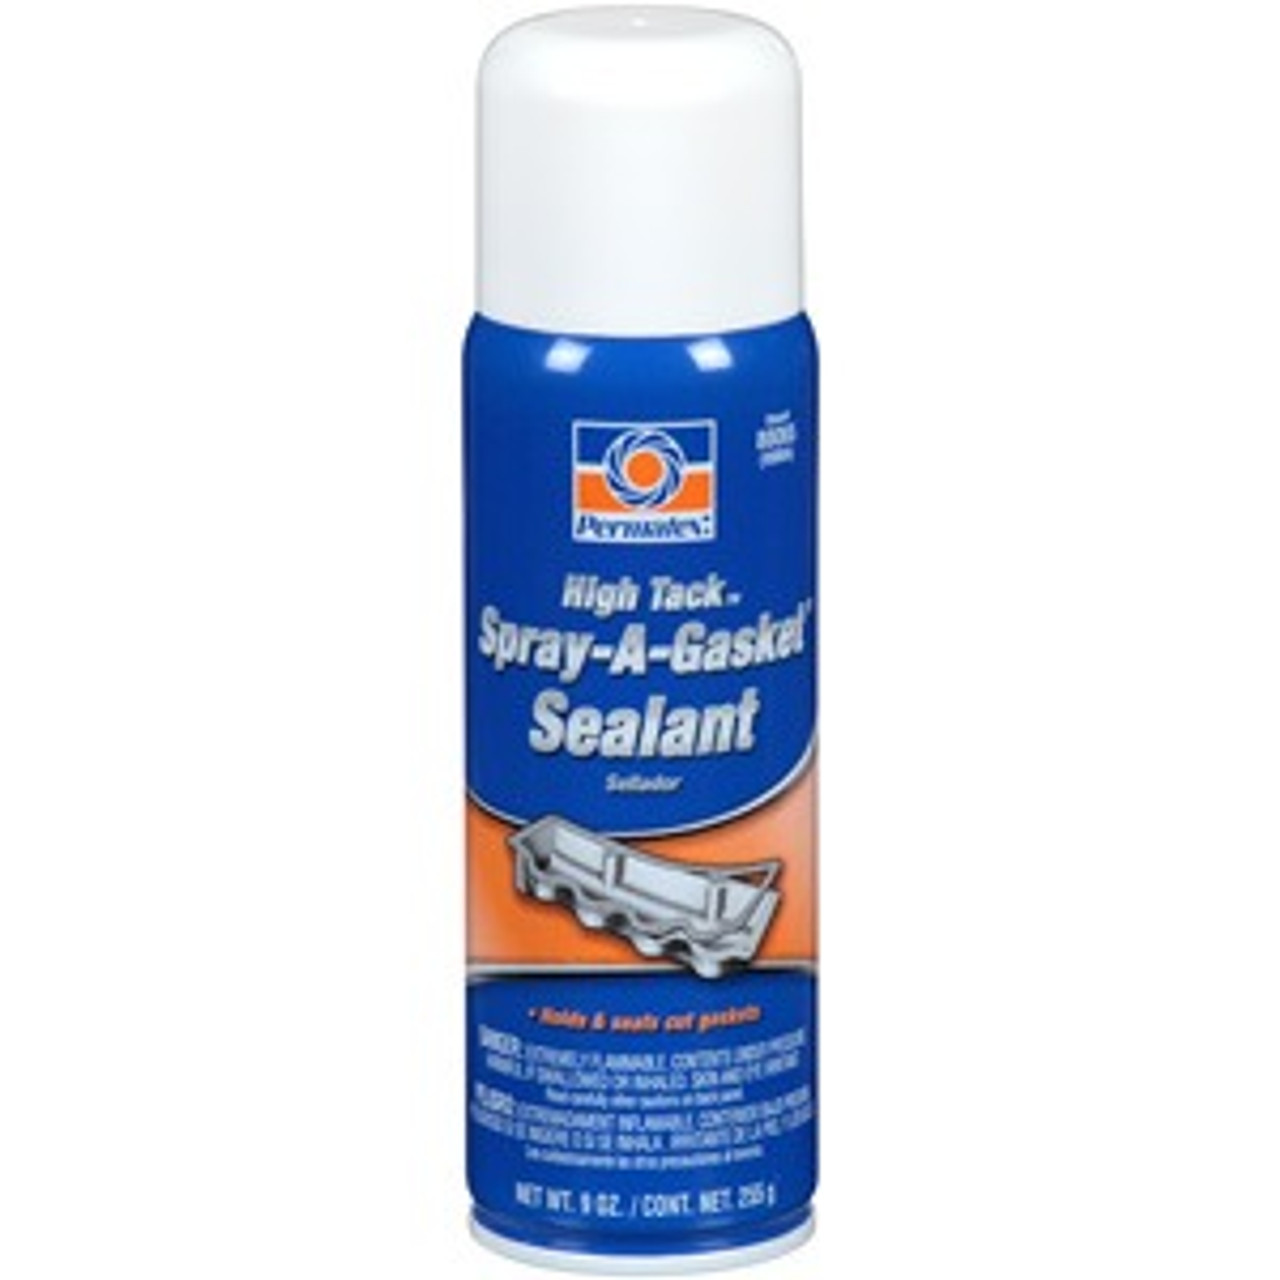 Hi-Tack Spray-A-Gasket Sealant 255g Can   80546